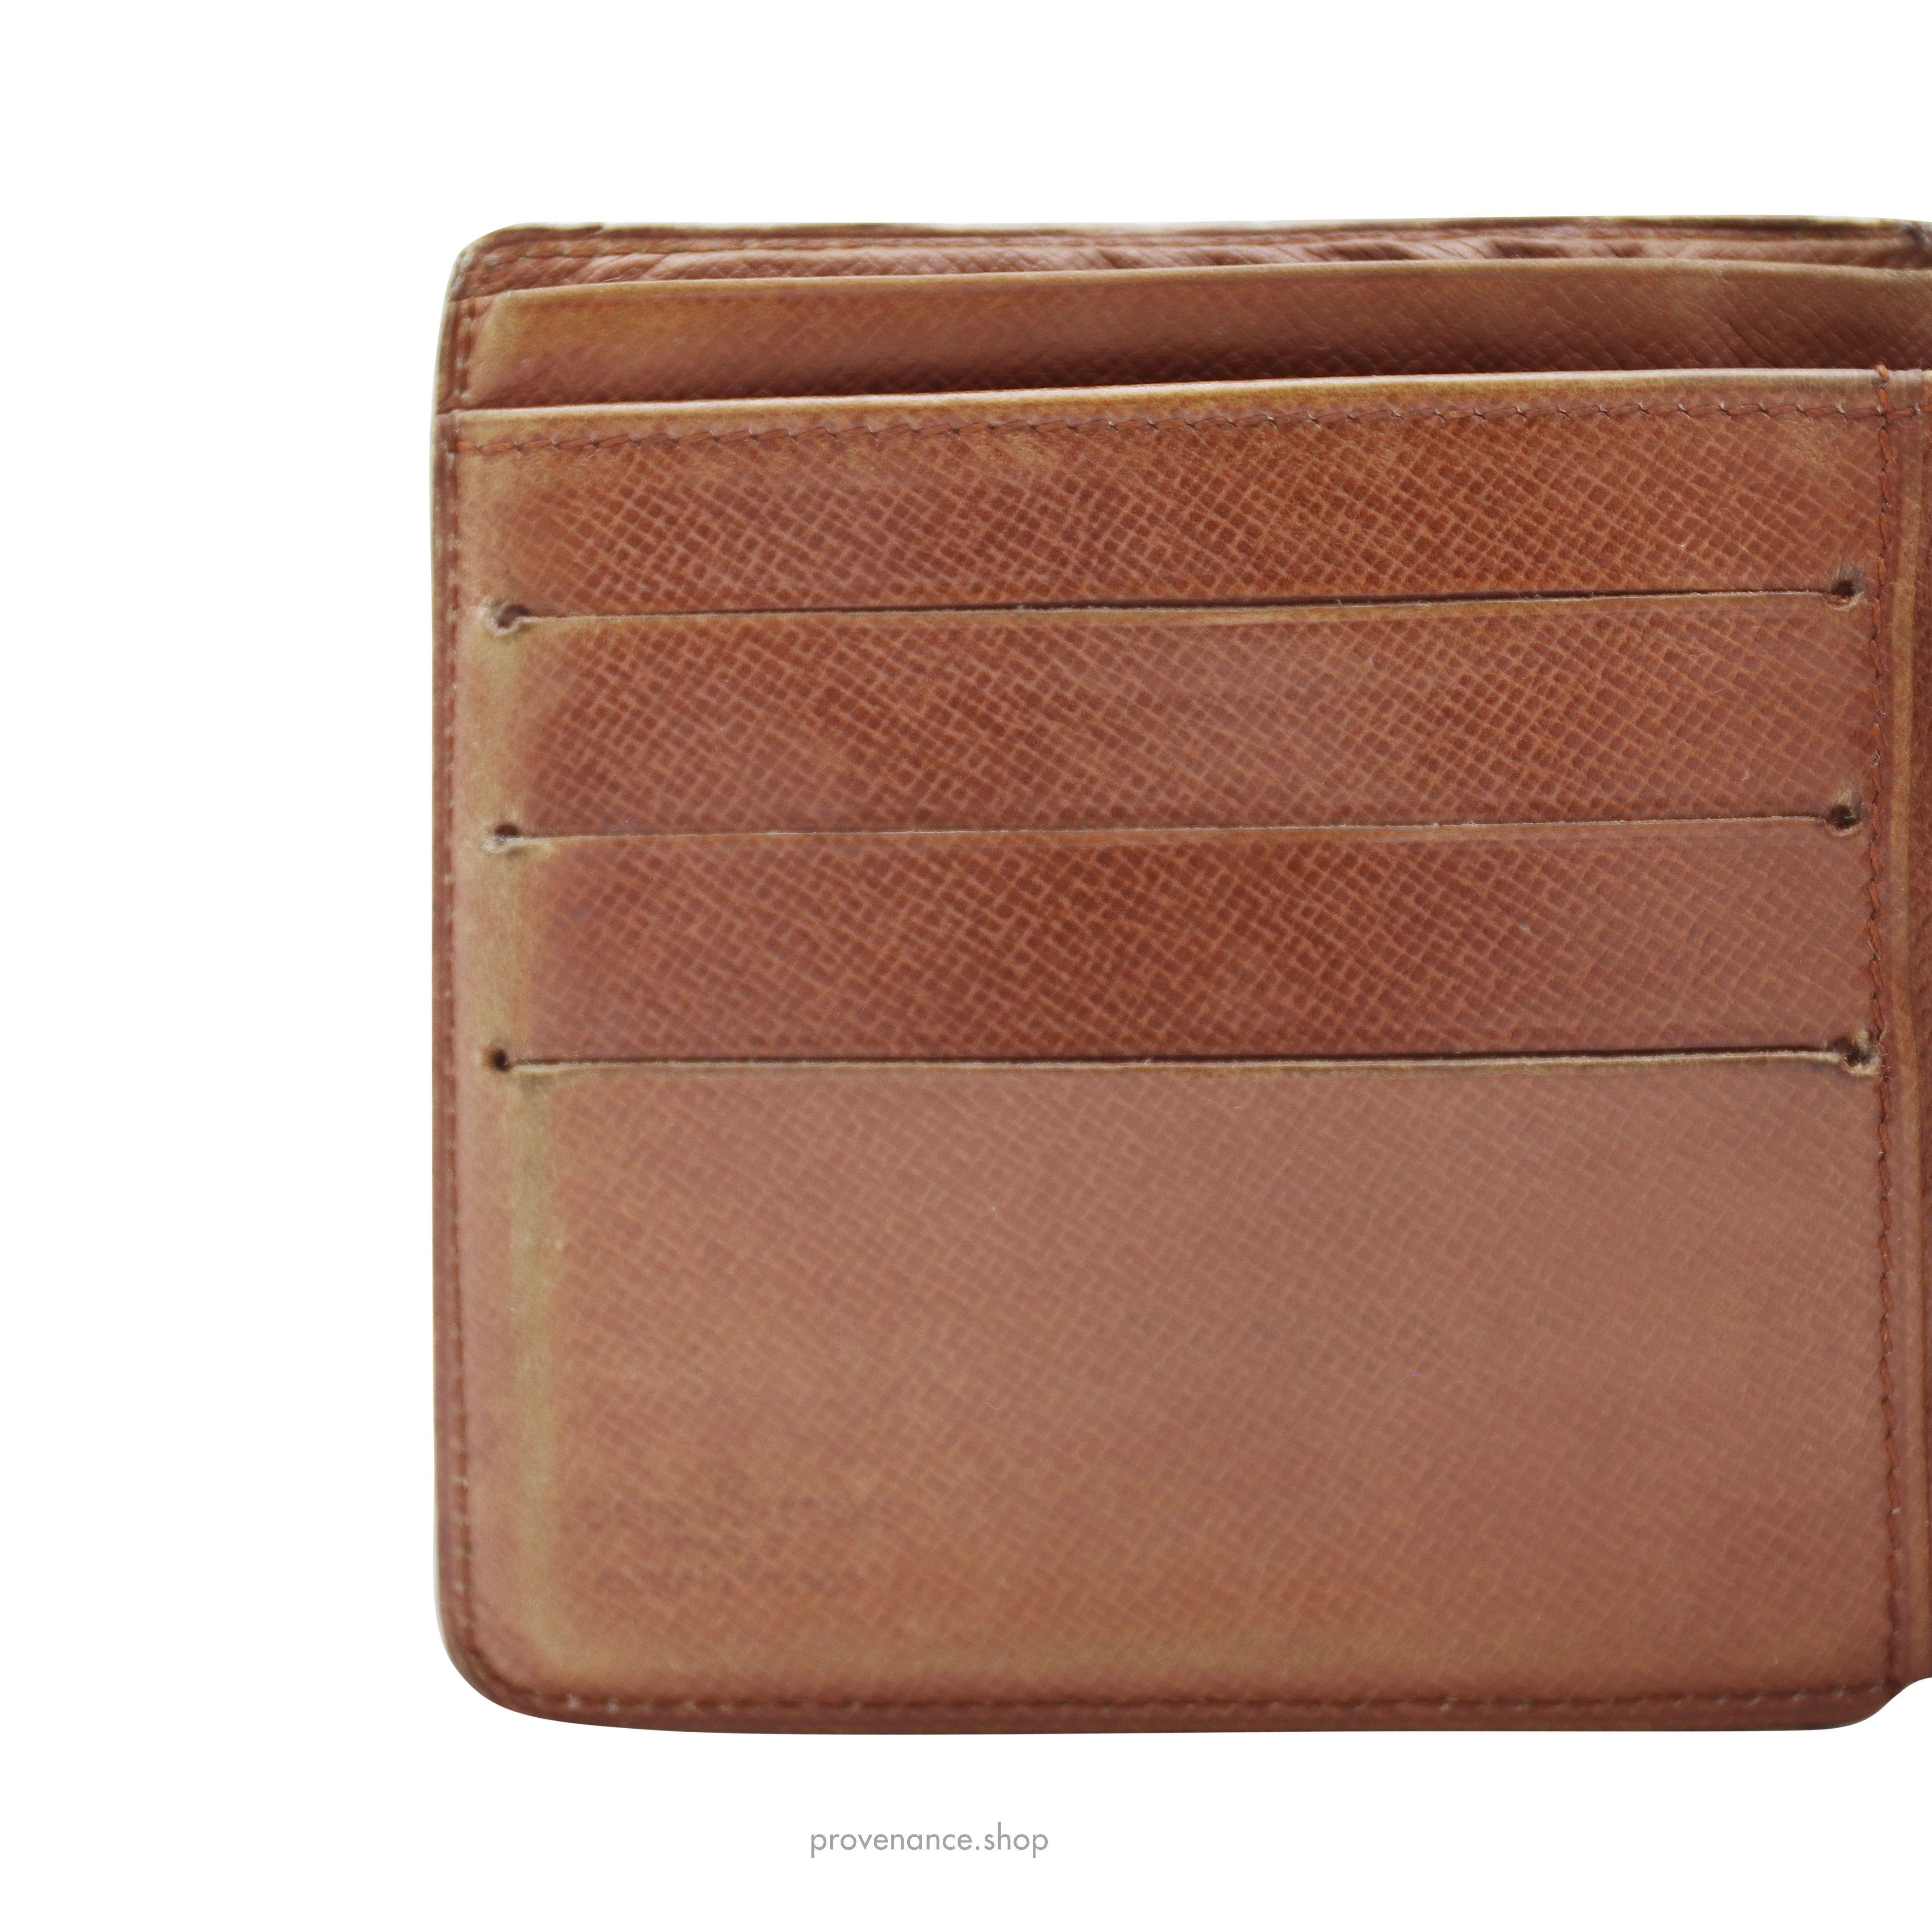 Louis Vuitton MARCO Wallet Billfold Monogram VIntage Authentic CA0995 Good